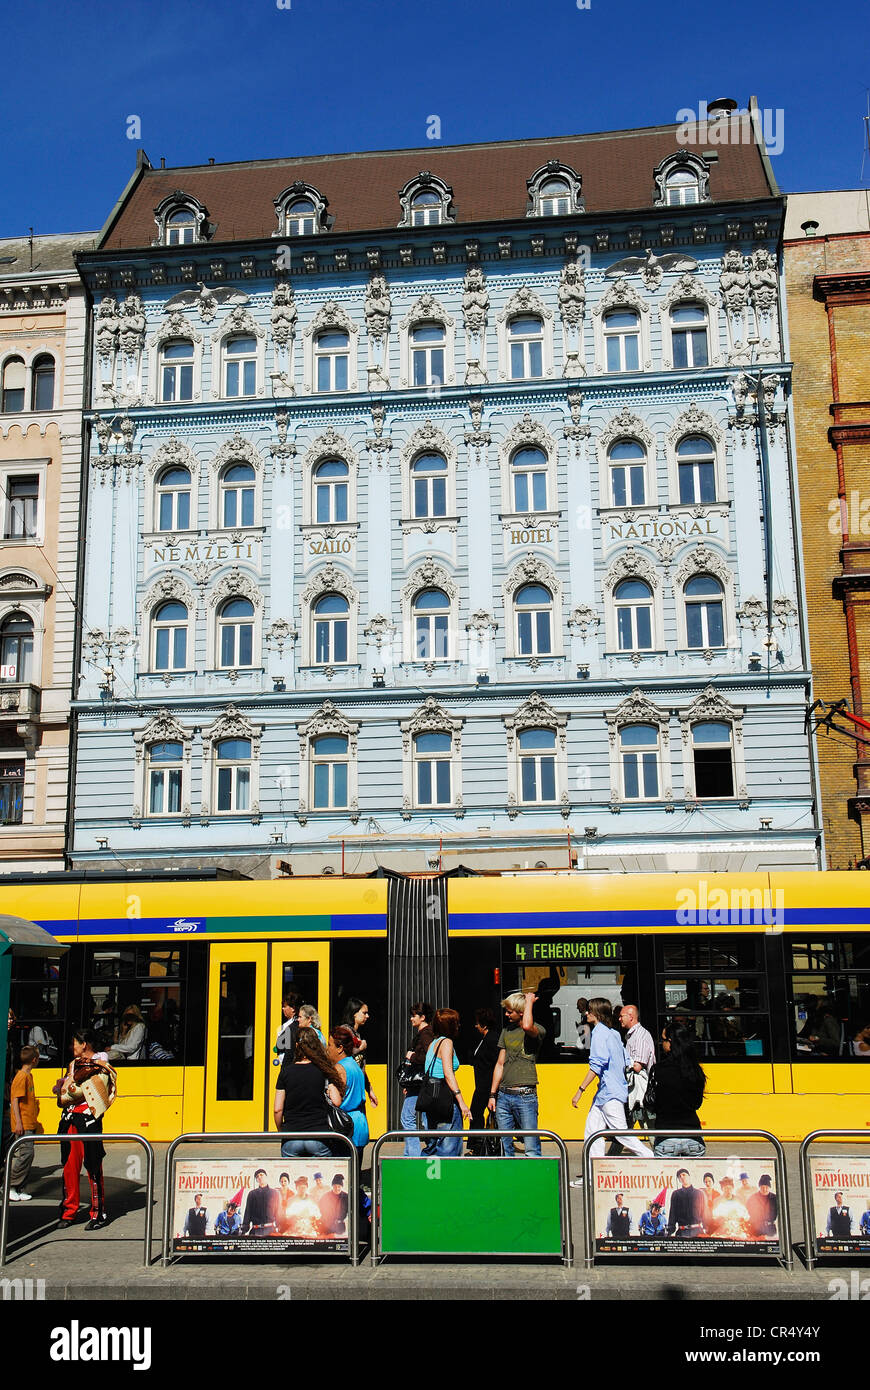 Hungría, Budapest, Patrimonio Mundial de la UNESCO, edificio de estilo art nouveau en la avenida Jószef körút a l'angle avec Rákóczi útca Foto de stock